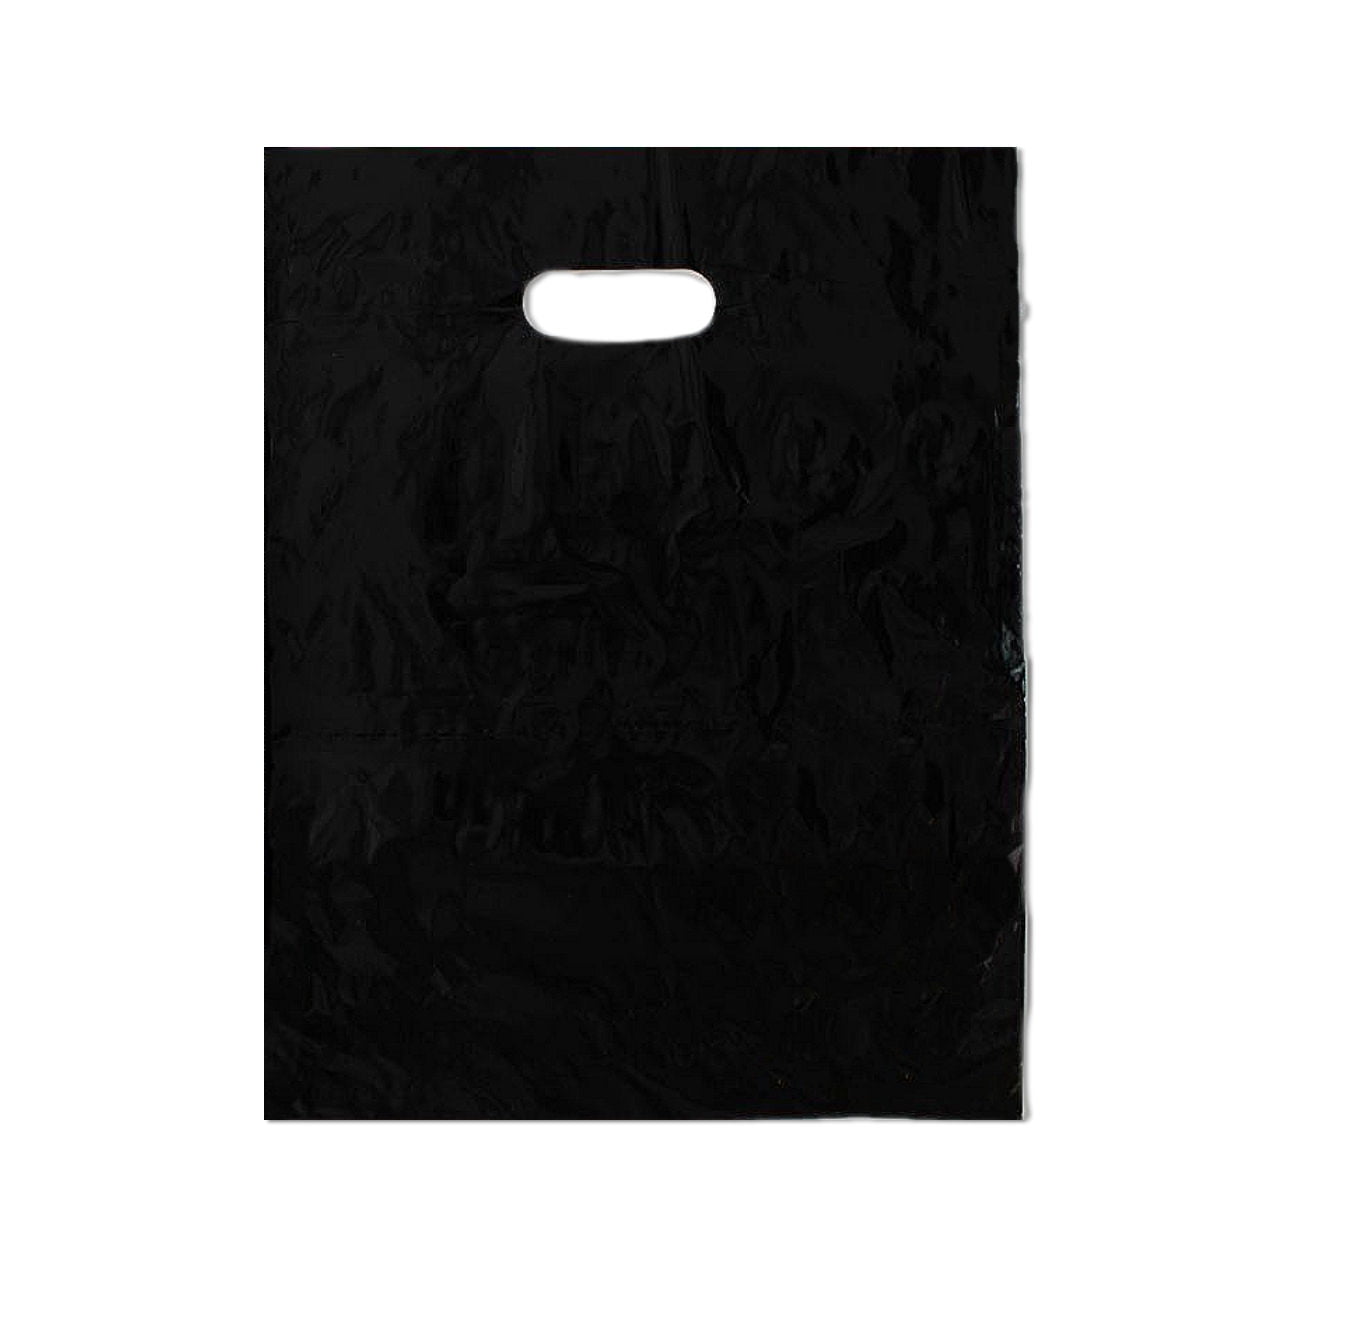 12 x 15 Black Plastic Merchandise Bags -Retail Shopping Bags (120 Pack)